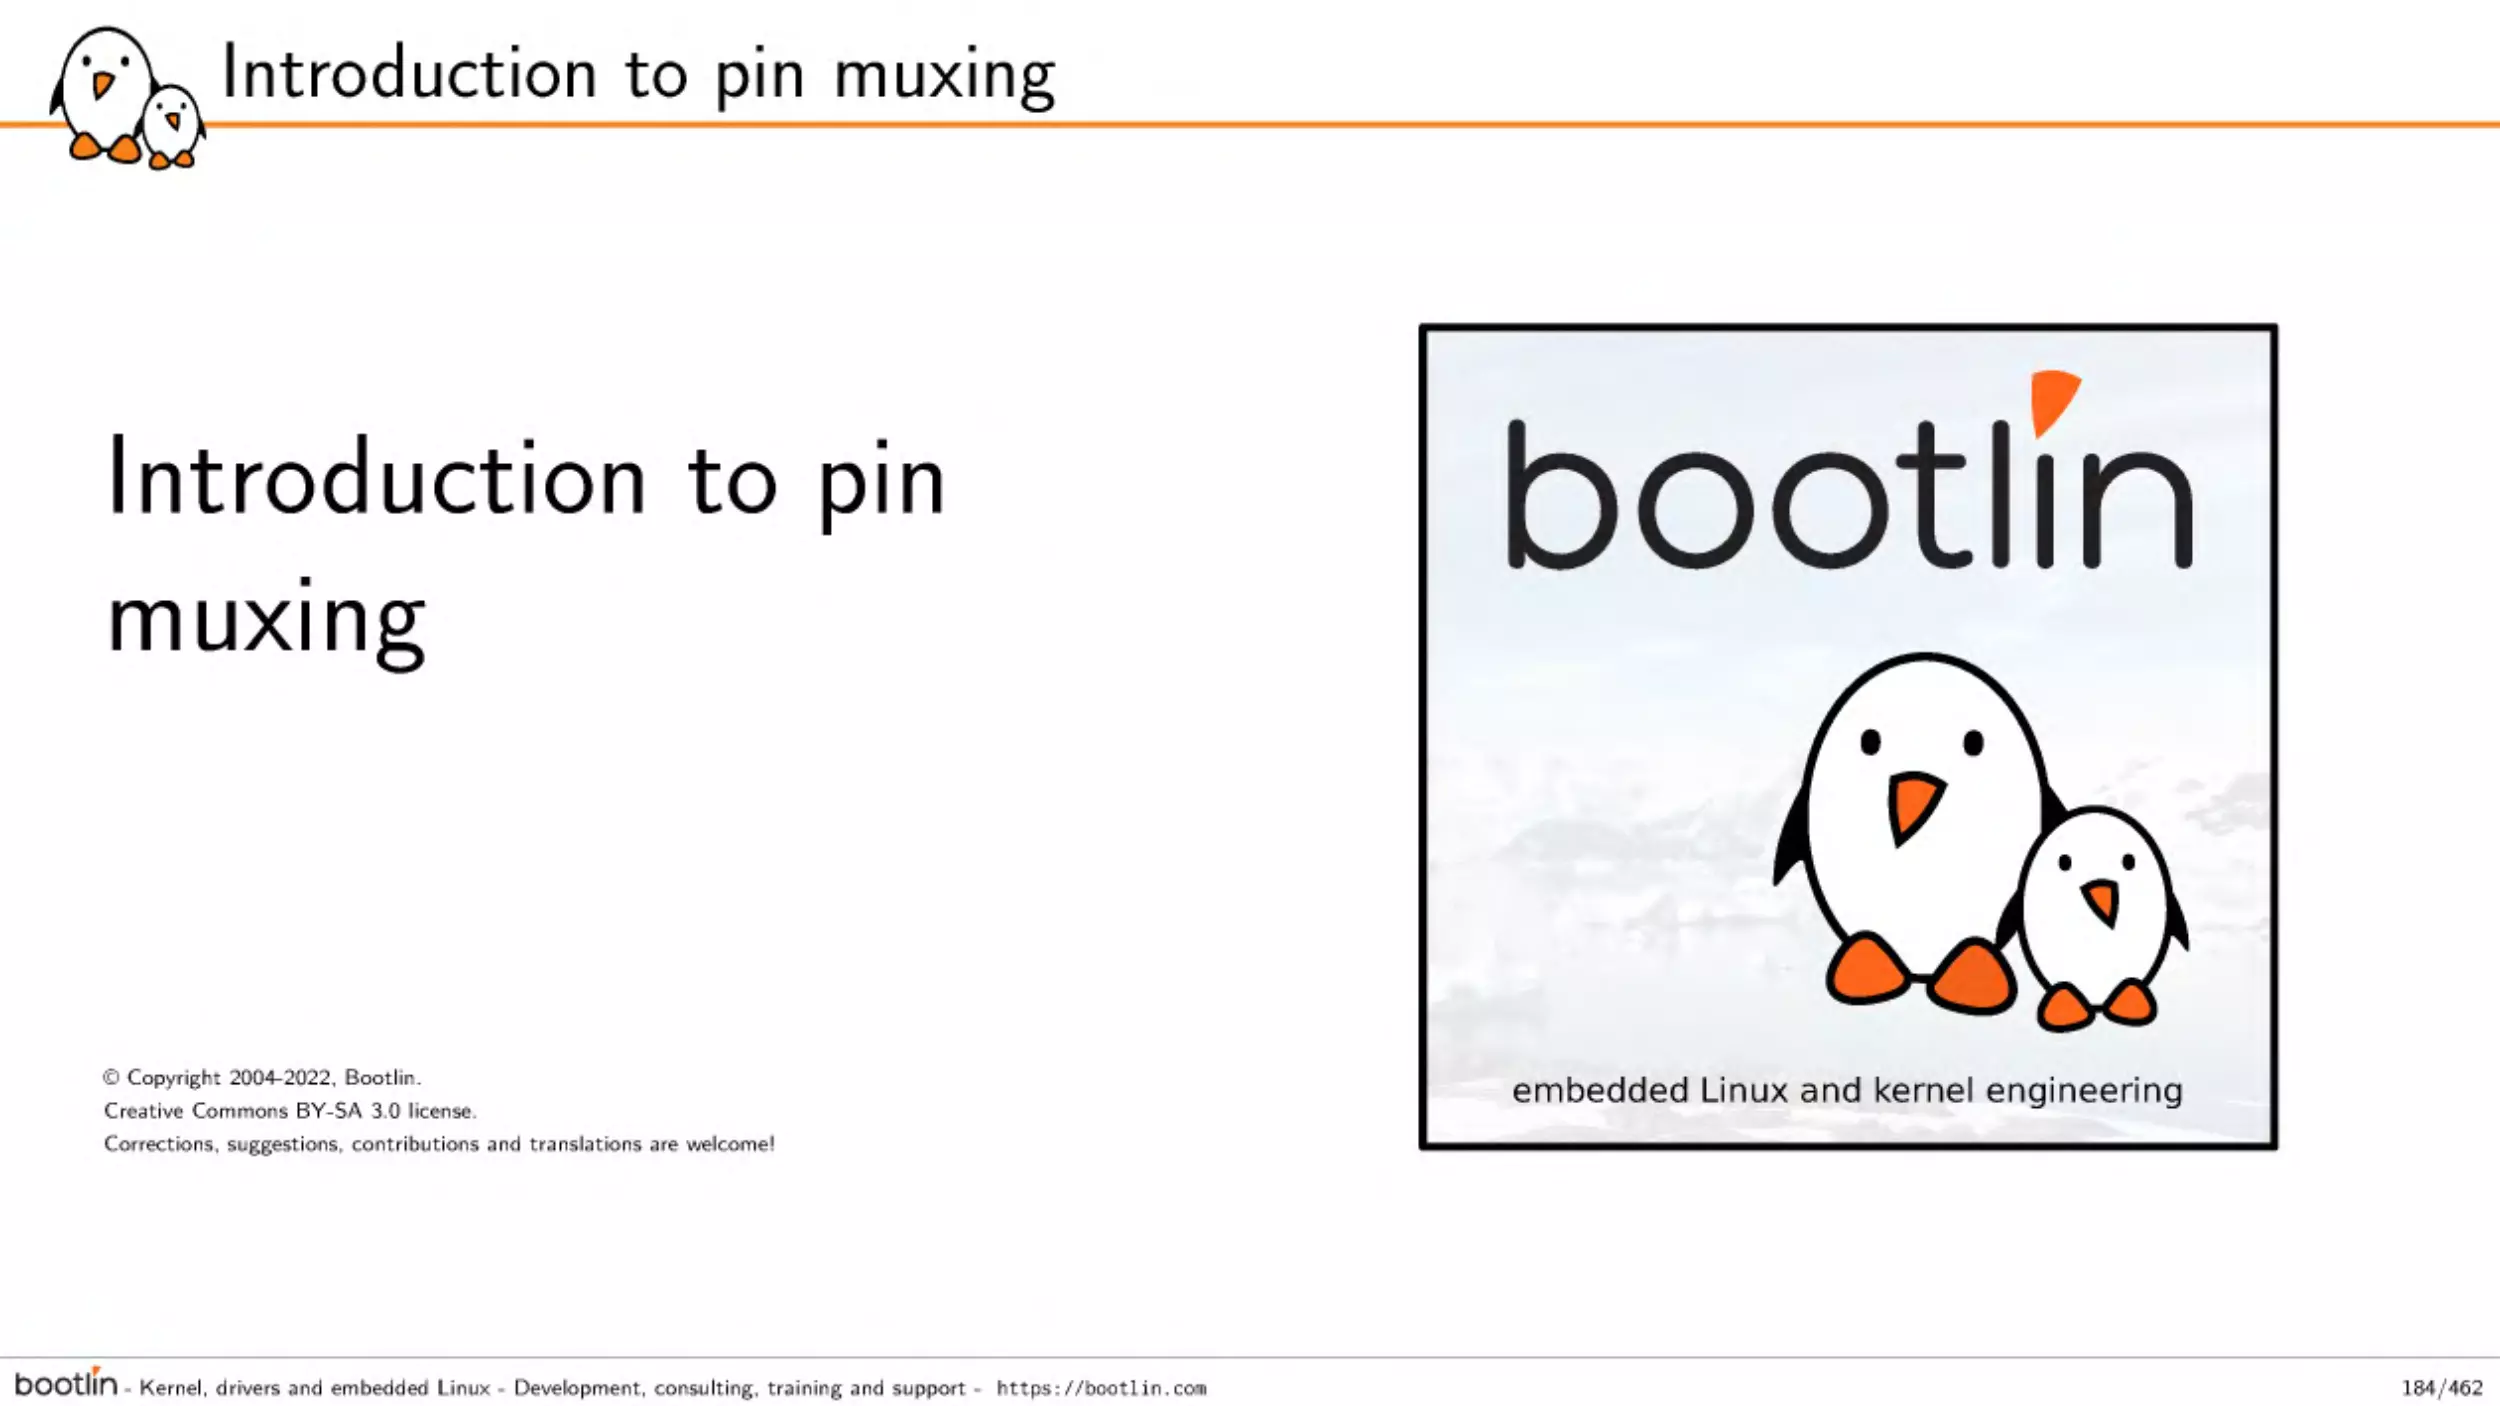 Introduction to pin muxing